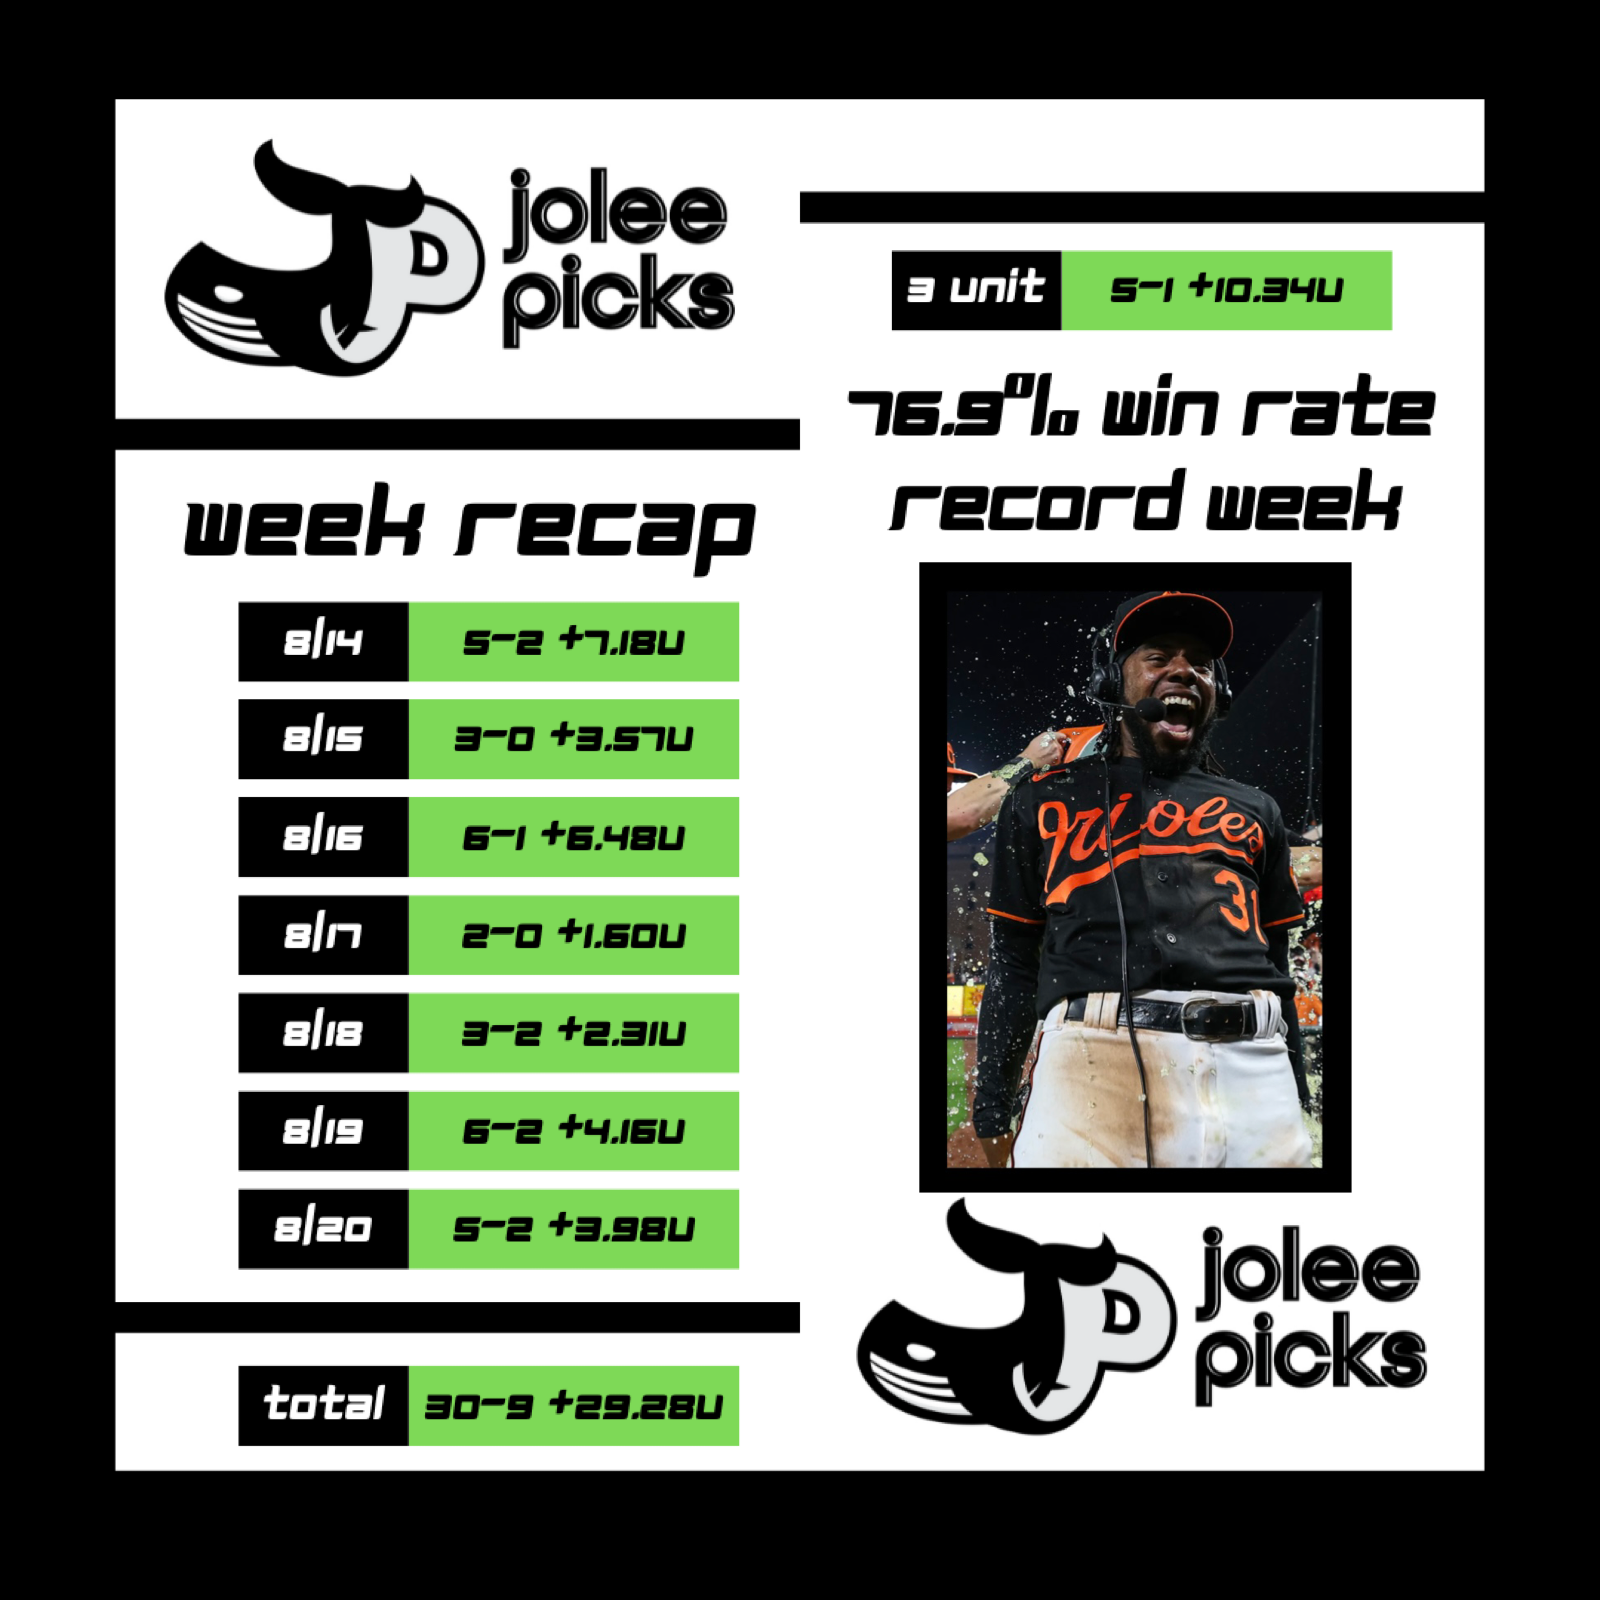 Record Week 8/14-8/20